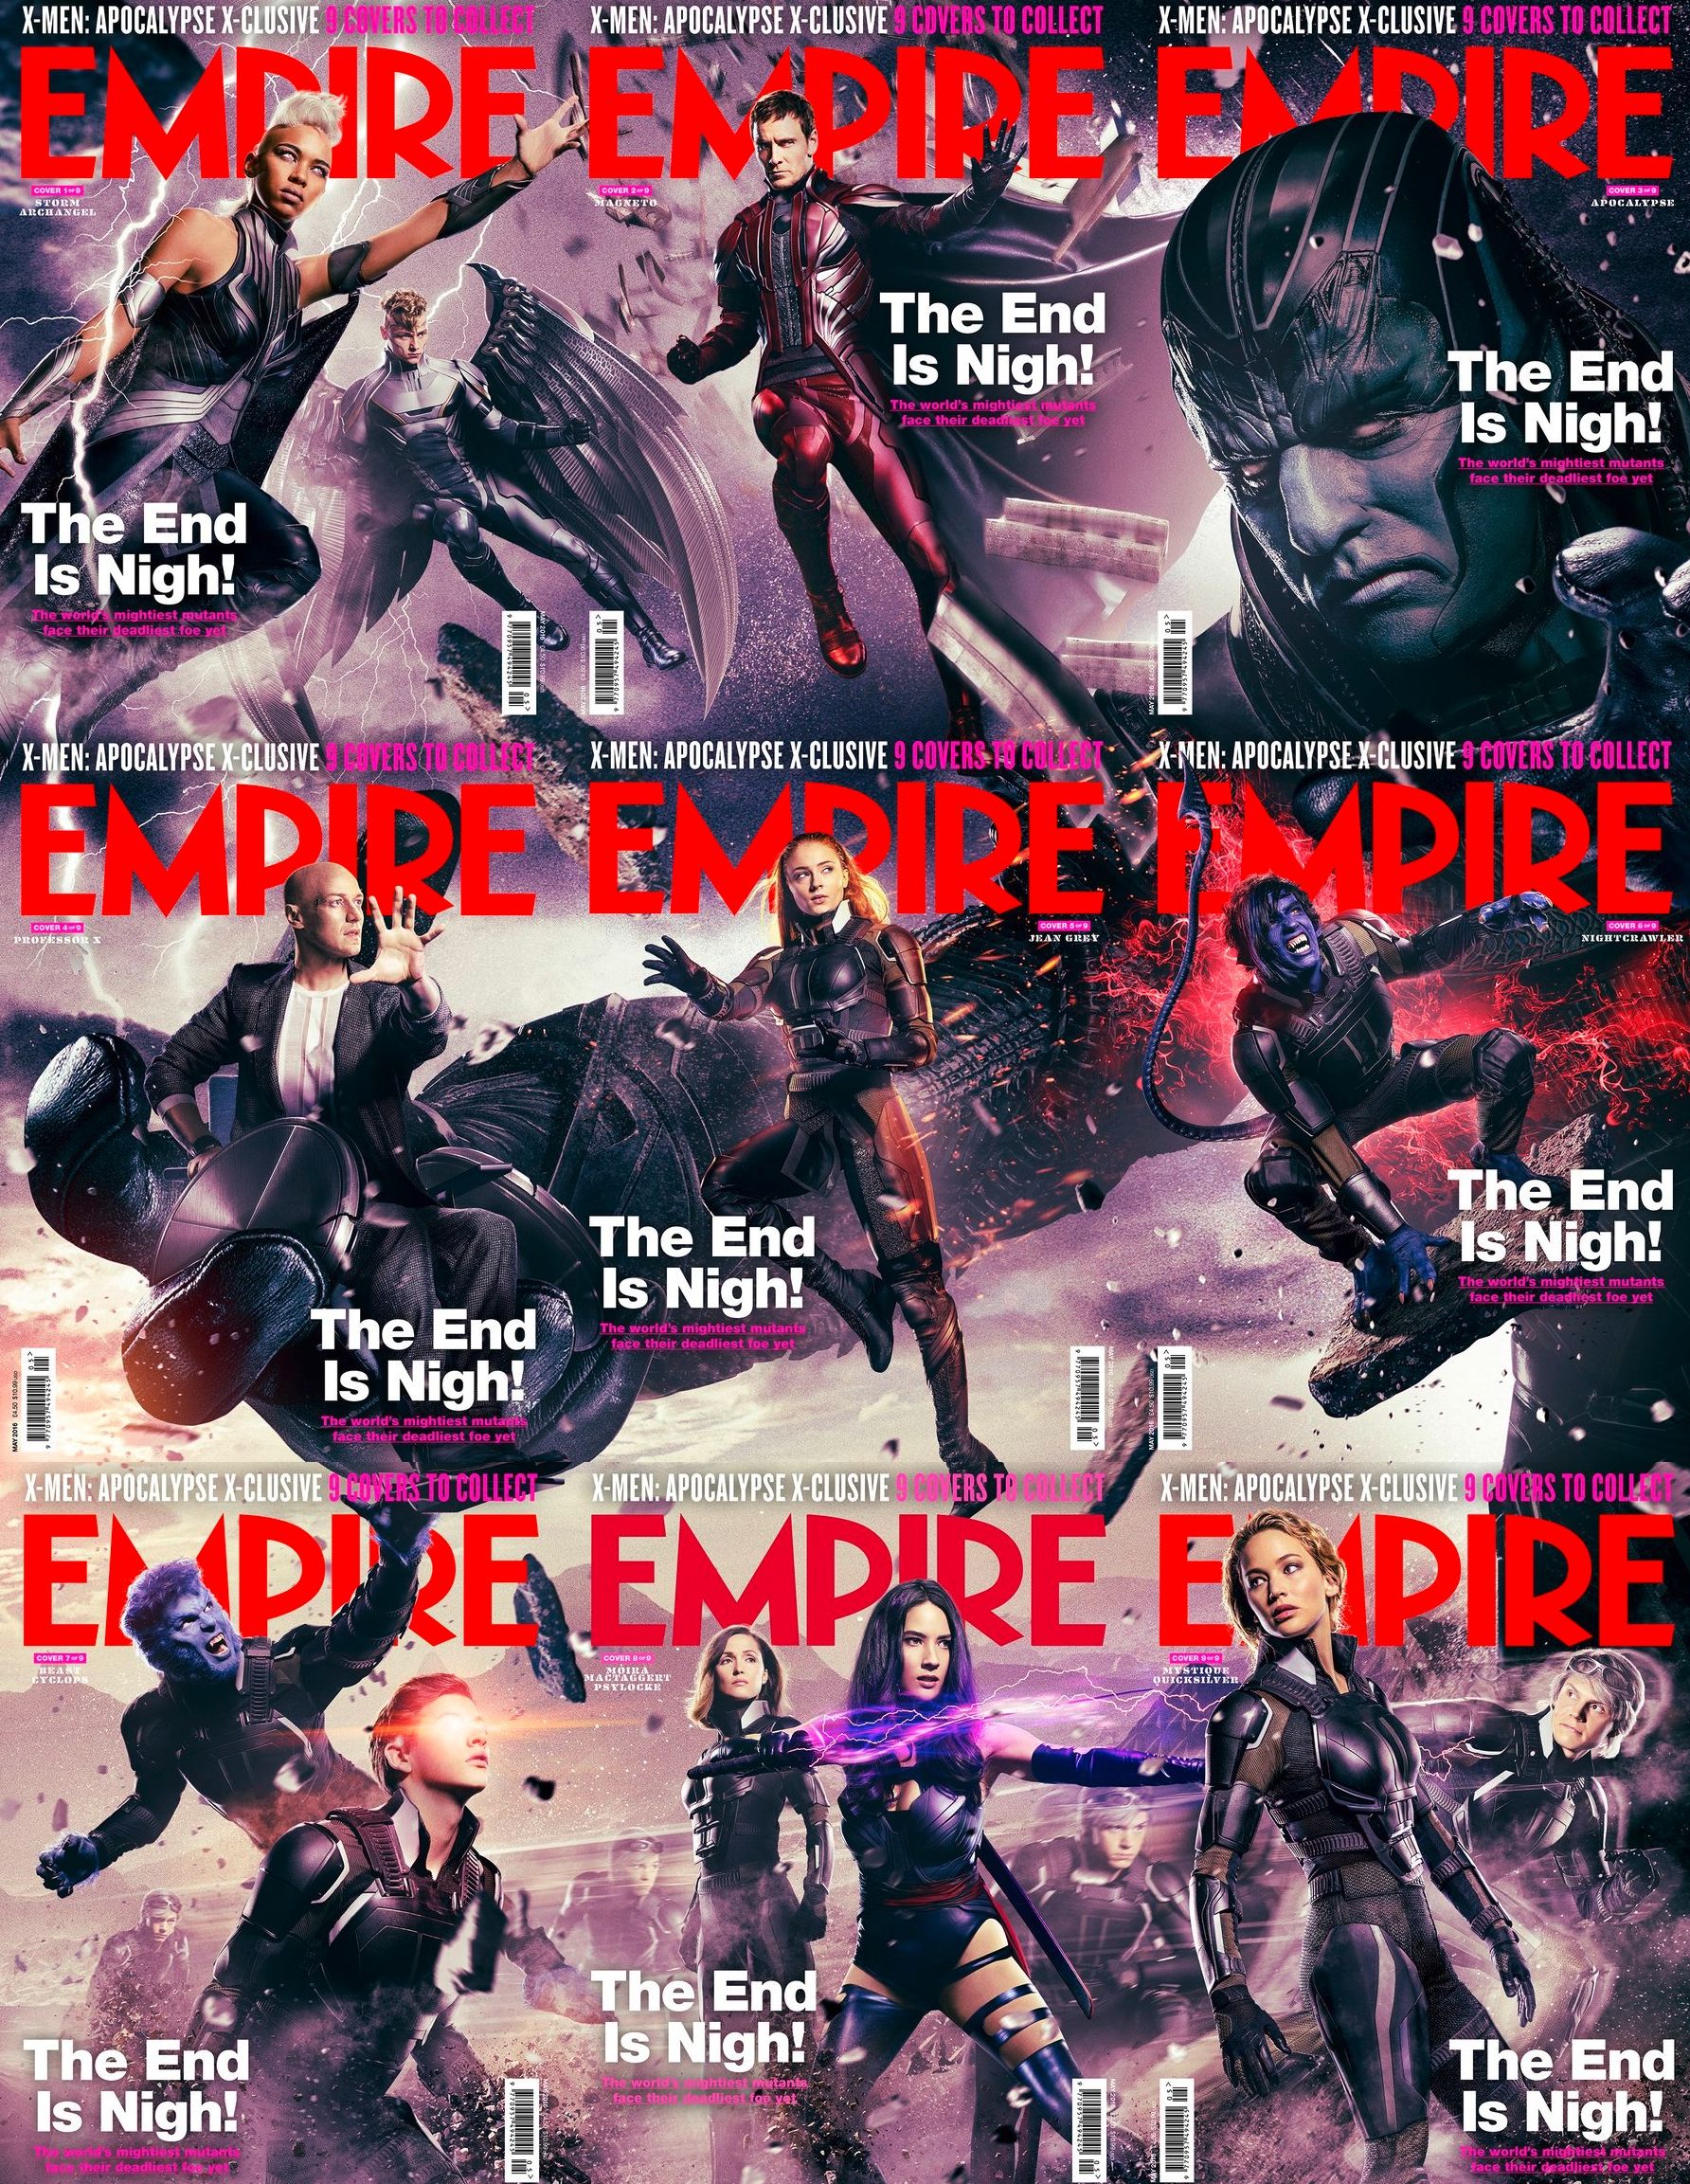 X-Men: Apocalypse Empire cover set